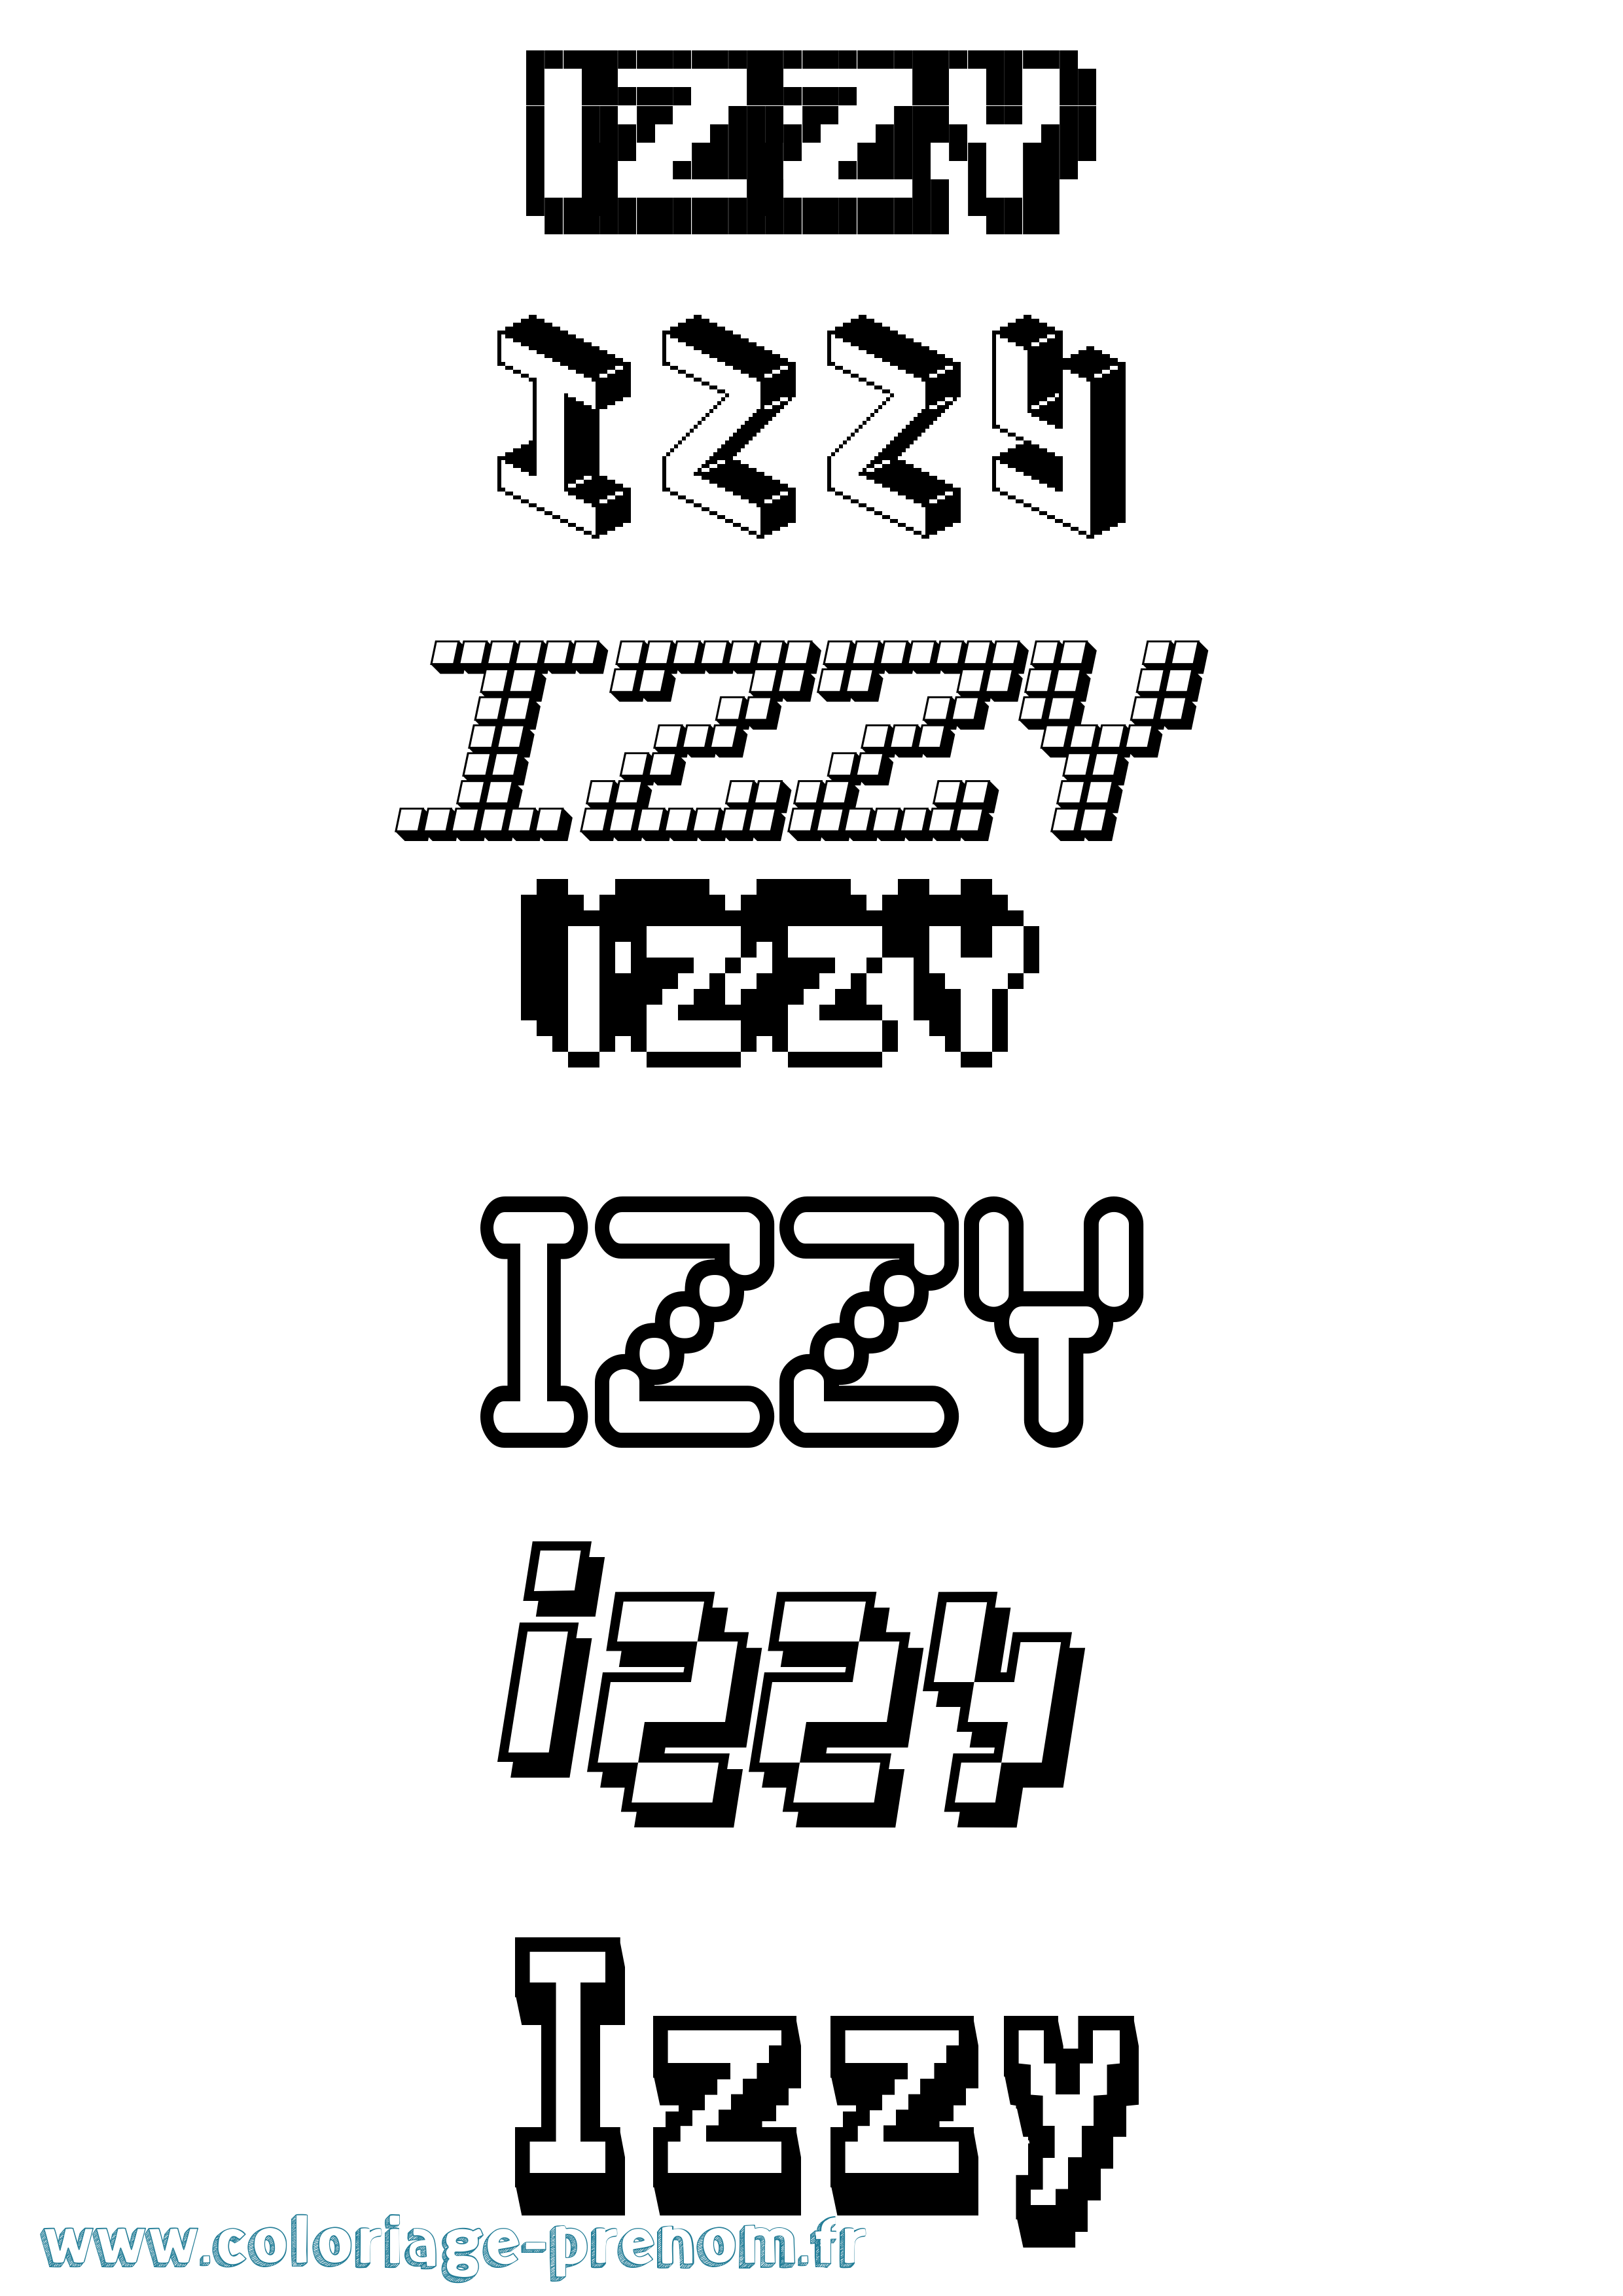 Coloriage prénom Izzy Pixel